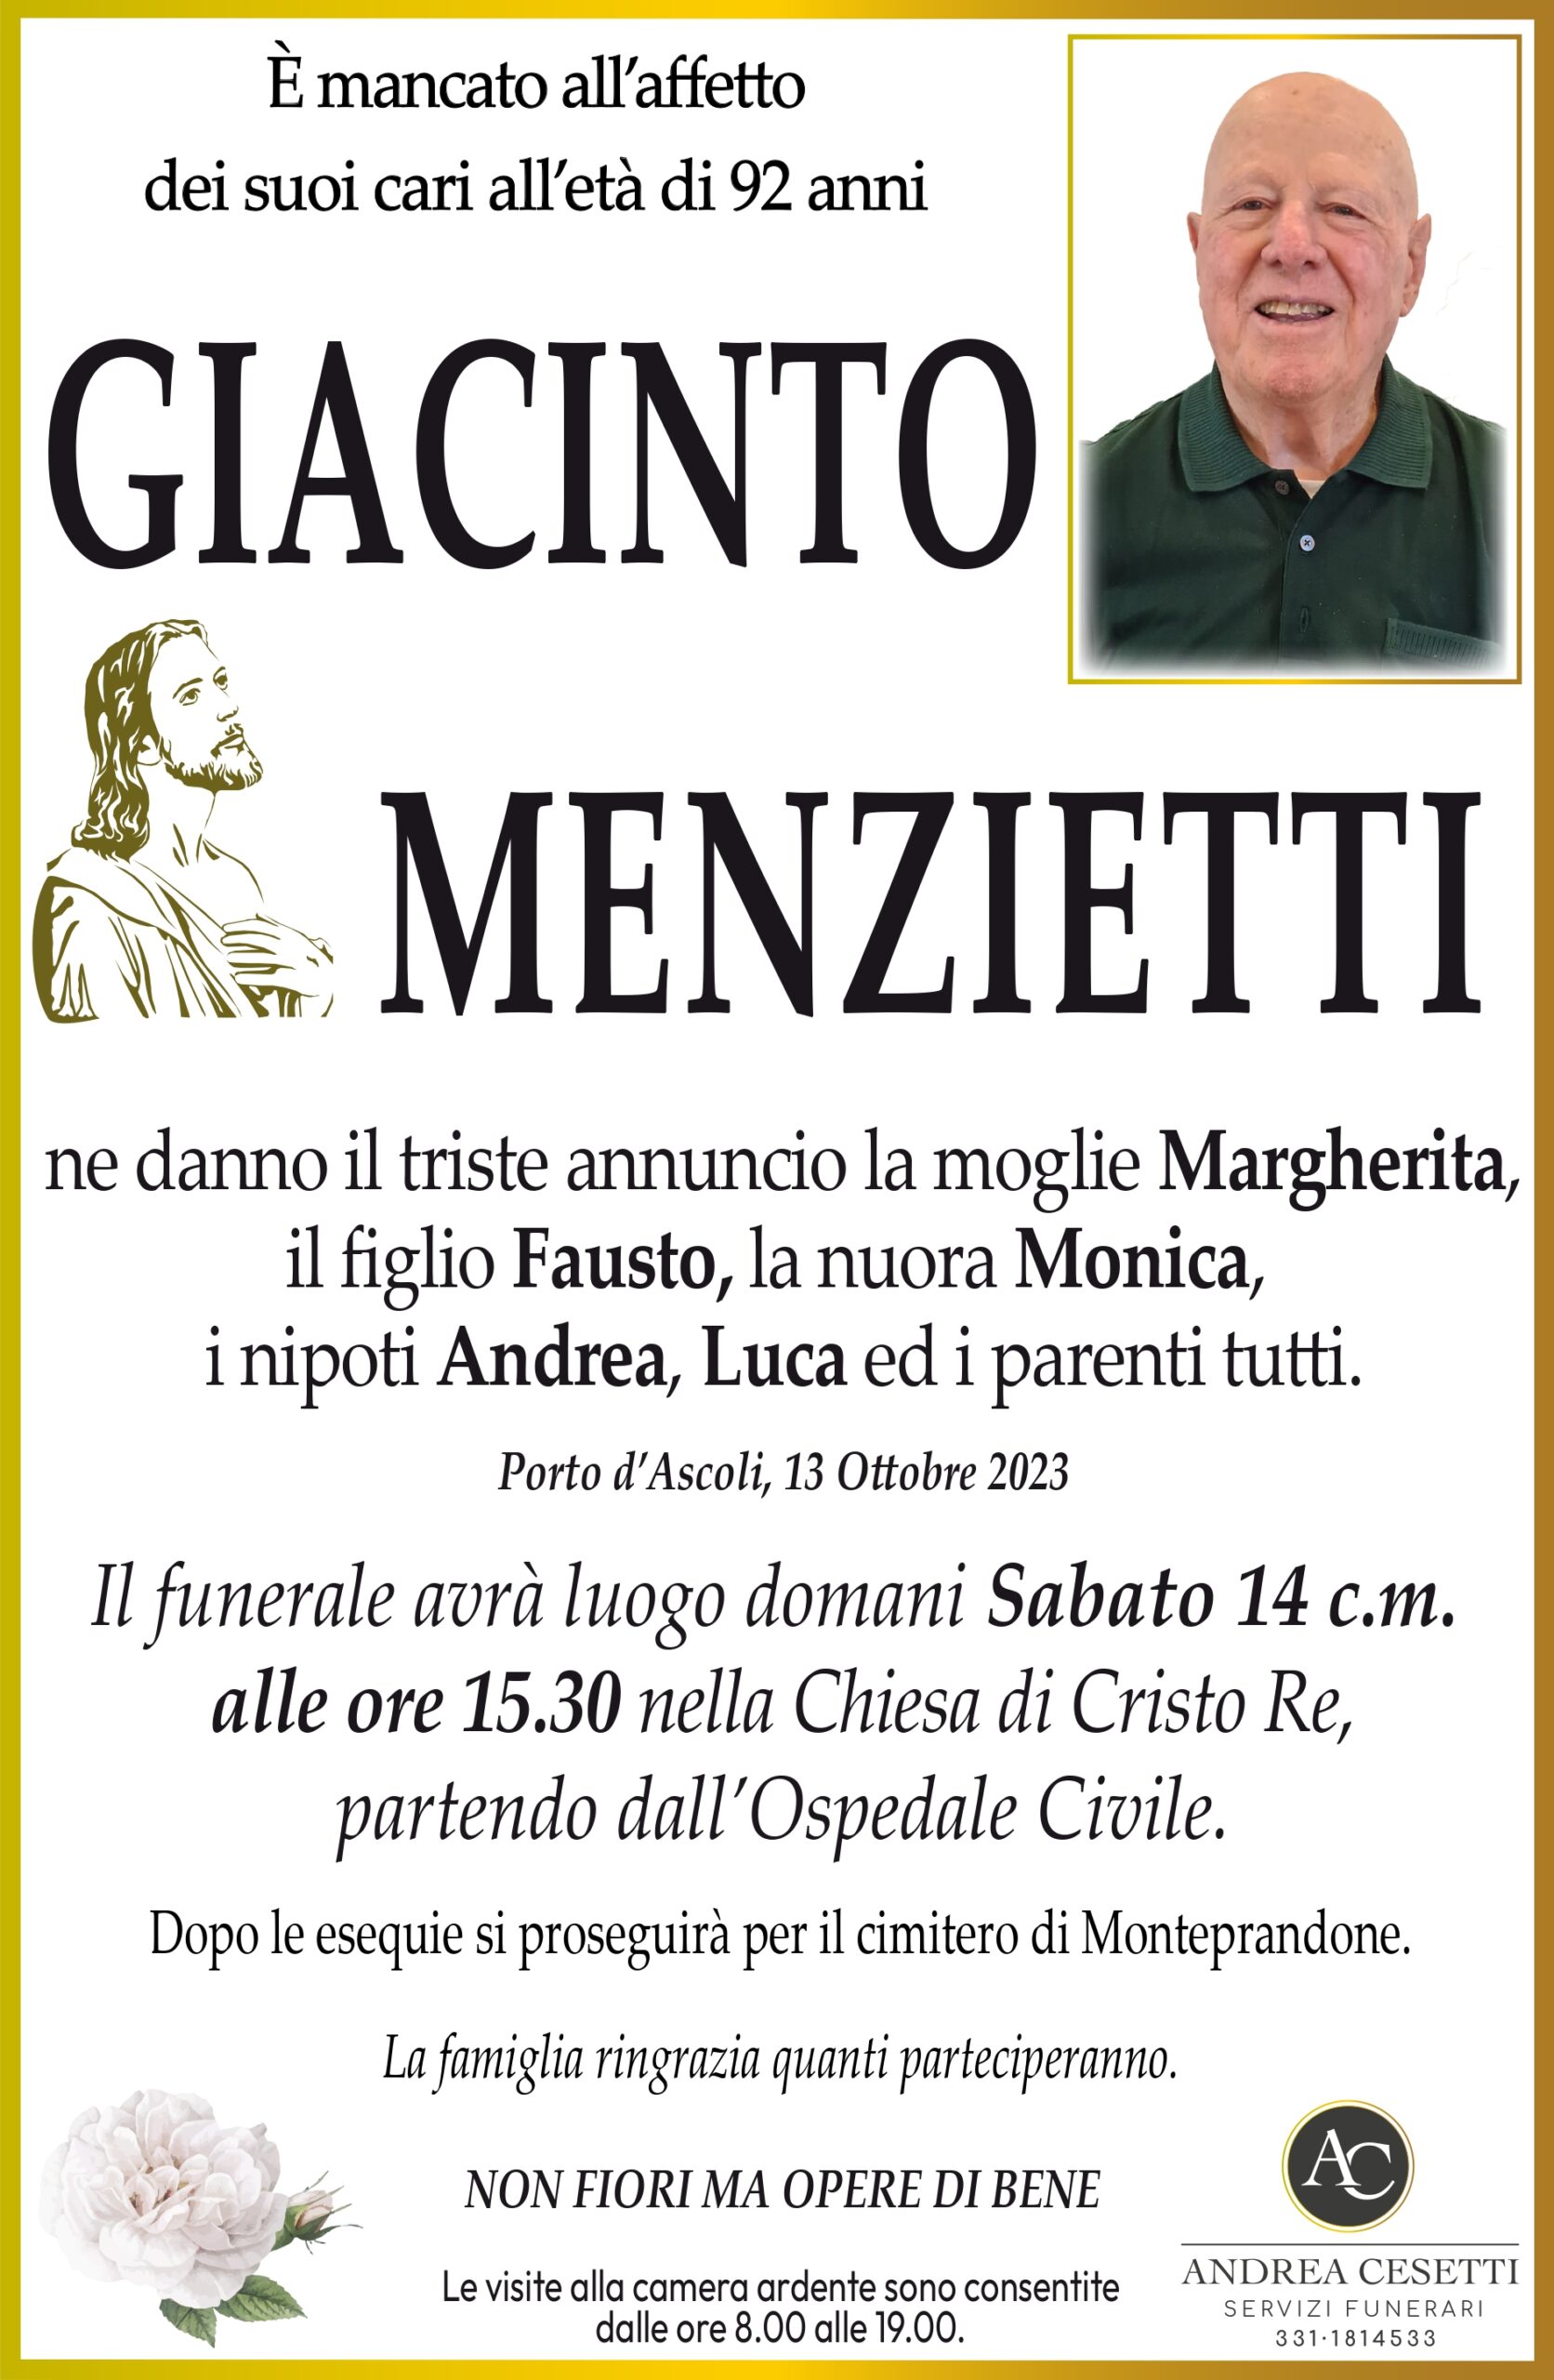 Giacinto Menzietti